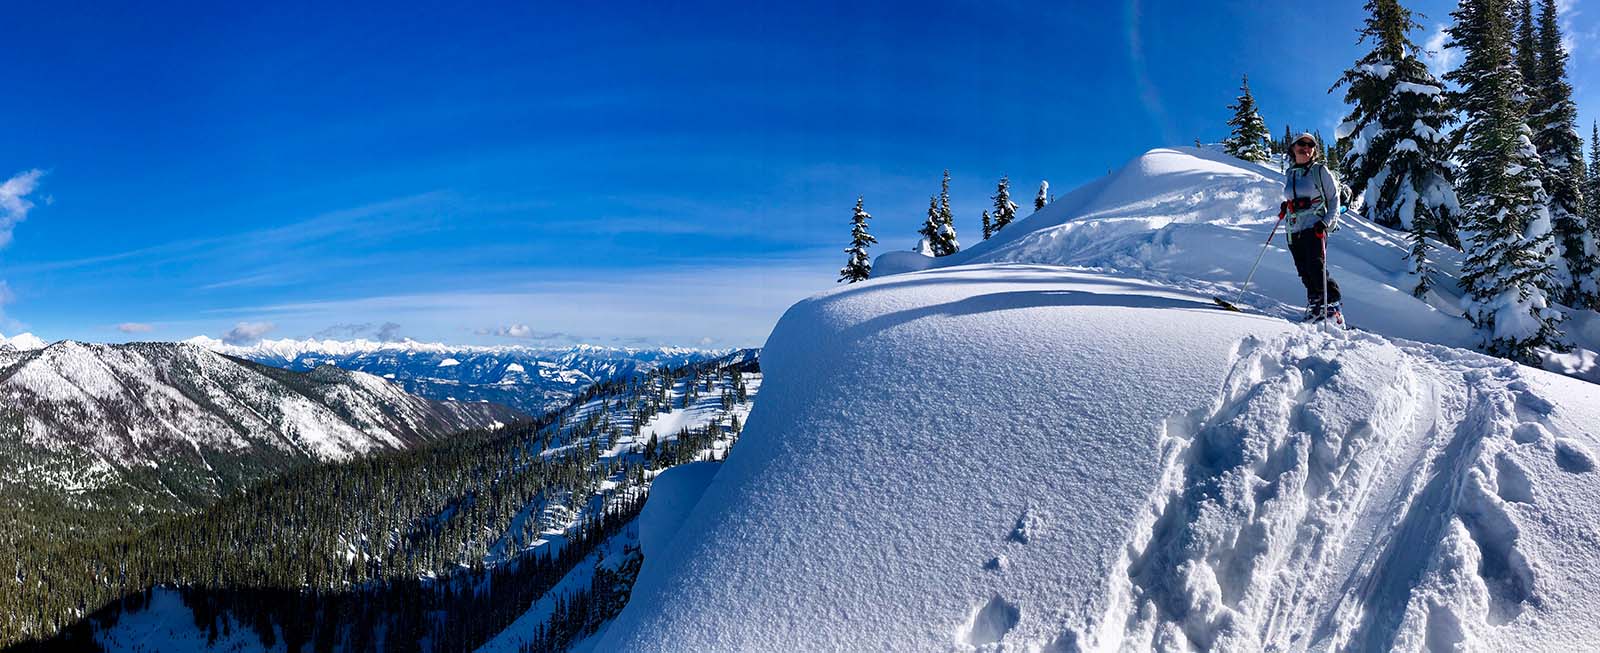 skier on ridge overlooks forested valley